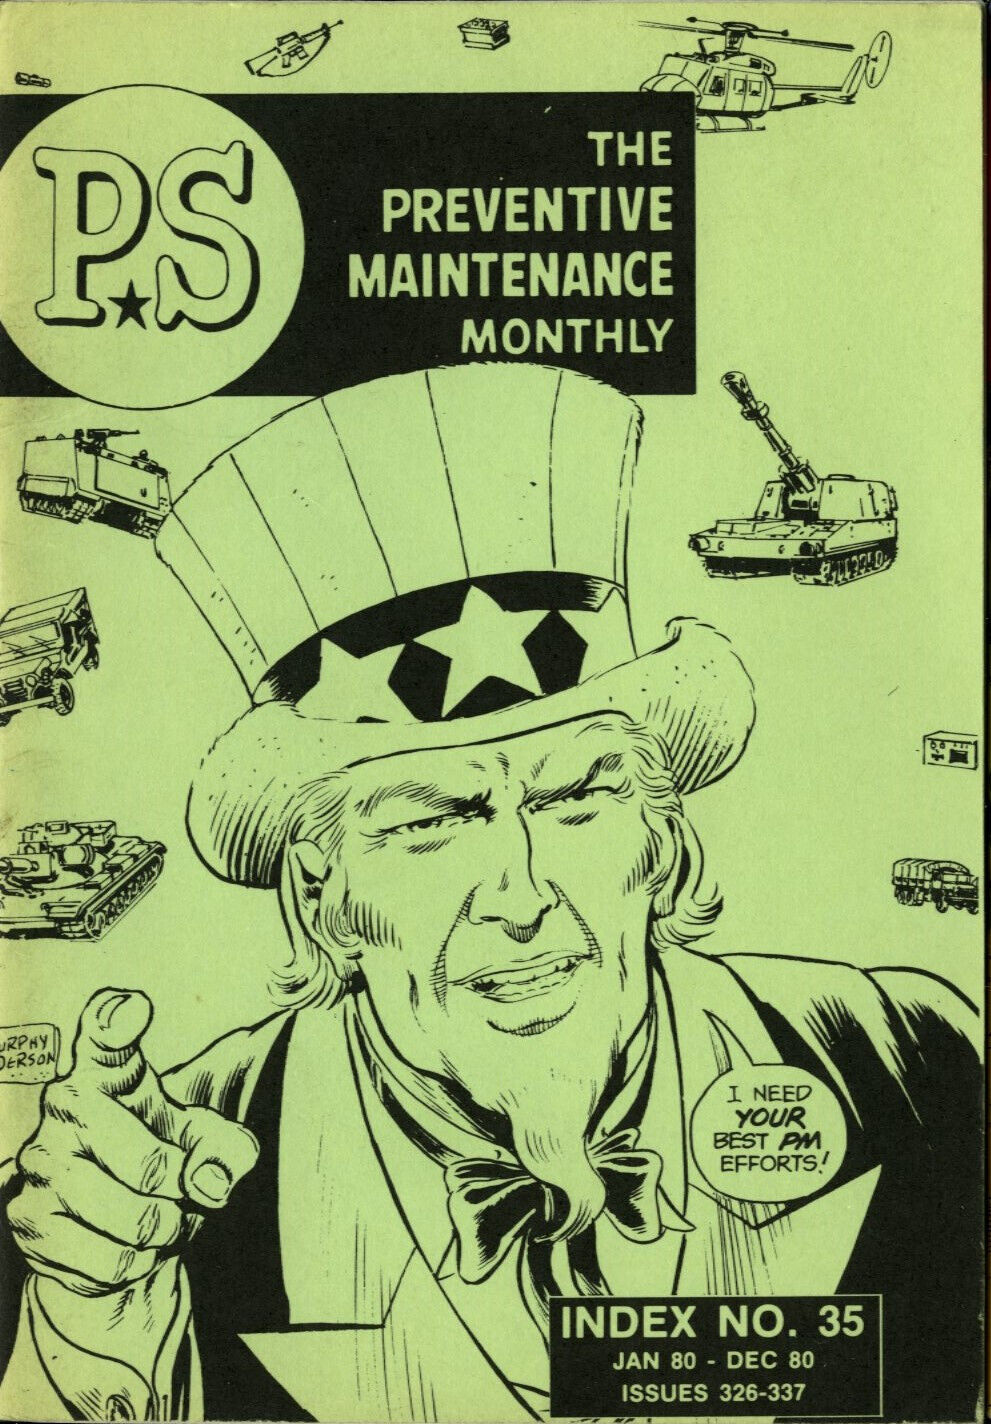 US Army PS The Preventive Maintenance Monthly Index No. 35 Jan-Dec 1980 (STLC)